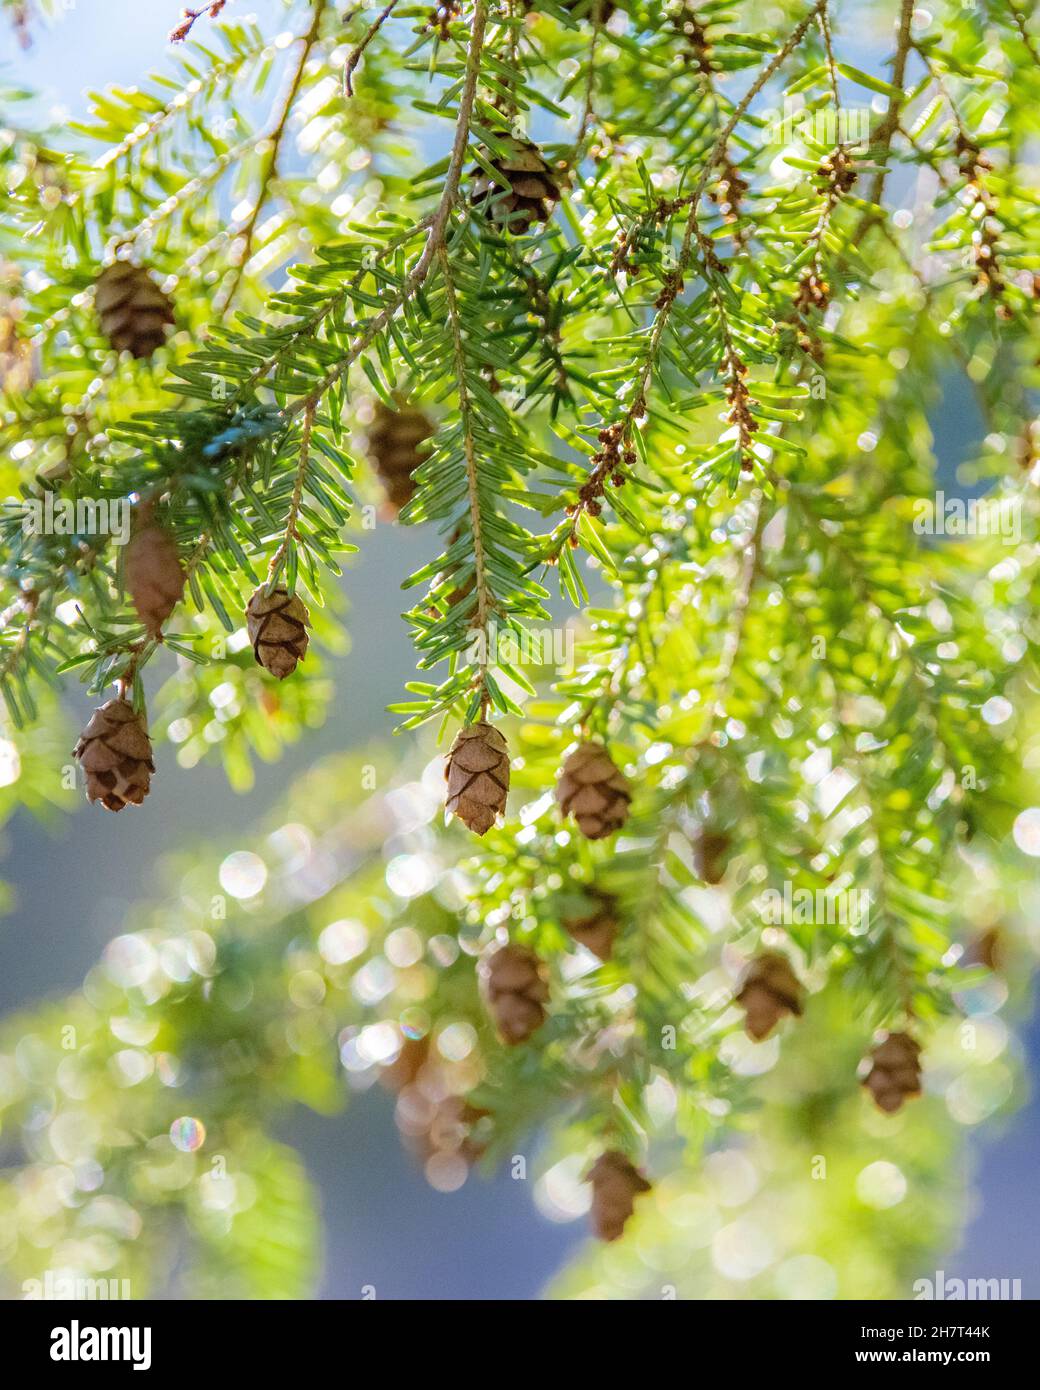 Eastern Hemlock - Canadian Hemlock - Tsuga or Tsuga canadensis - Adirondack pine tree conifer with pine cones in Adirondack State Park Stock Photo